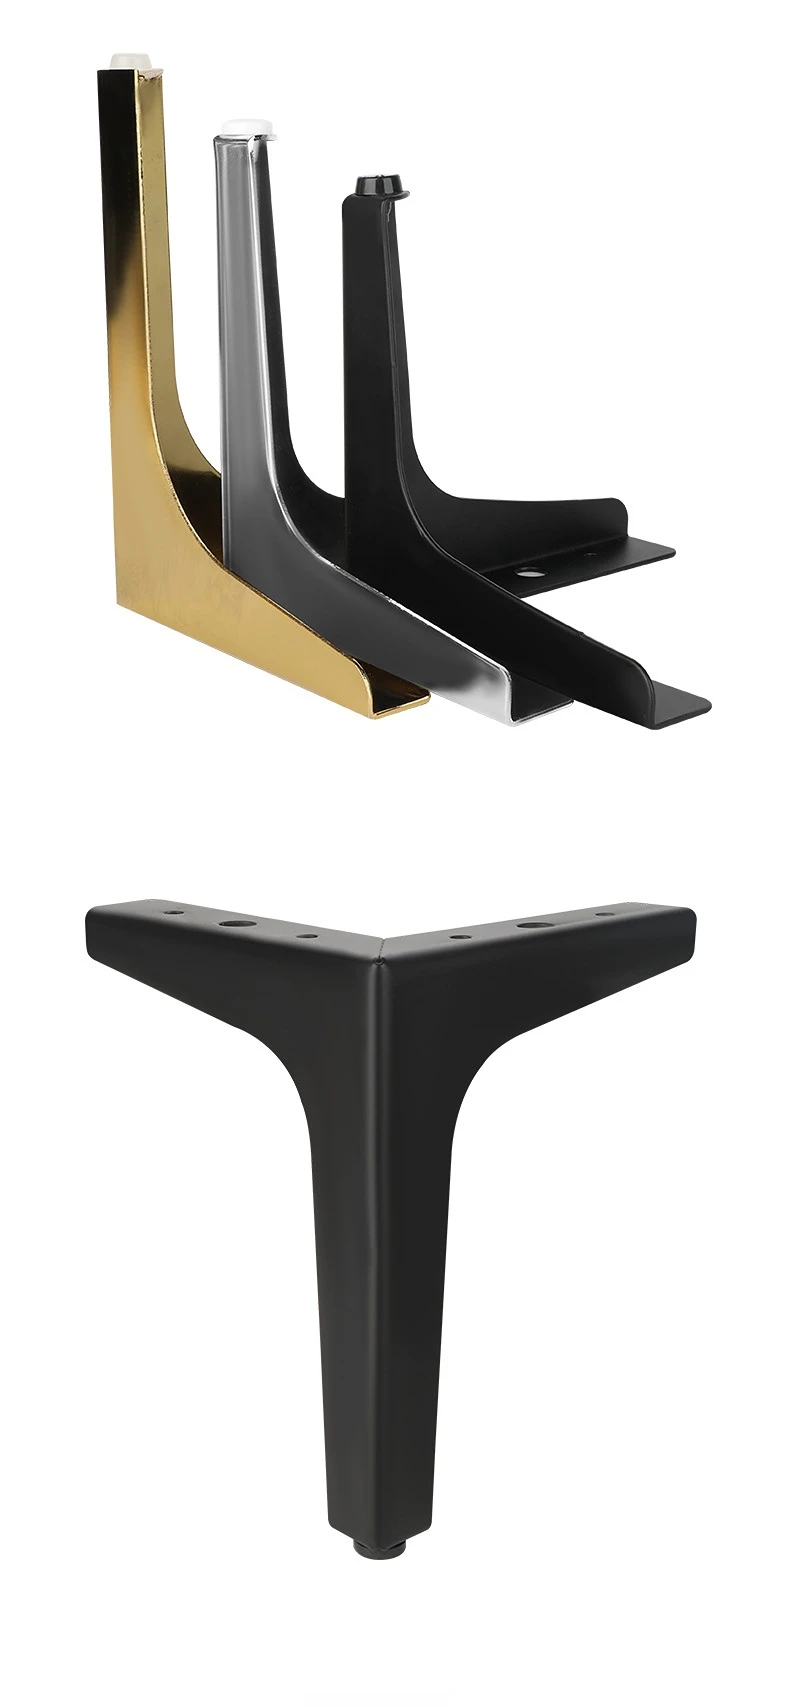 4Pcs/Set Household Furniture Legs Luxury Gold Black Silver Heavy Duty Metal Sofa Feet for Table Chair Desk Furniture Hardware